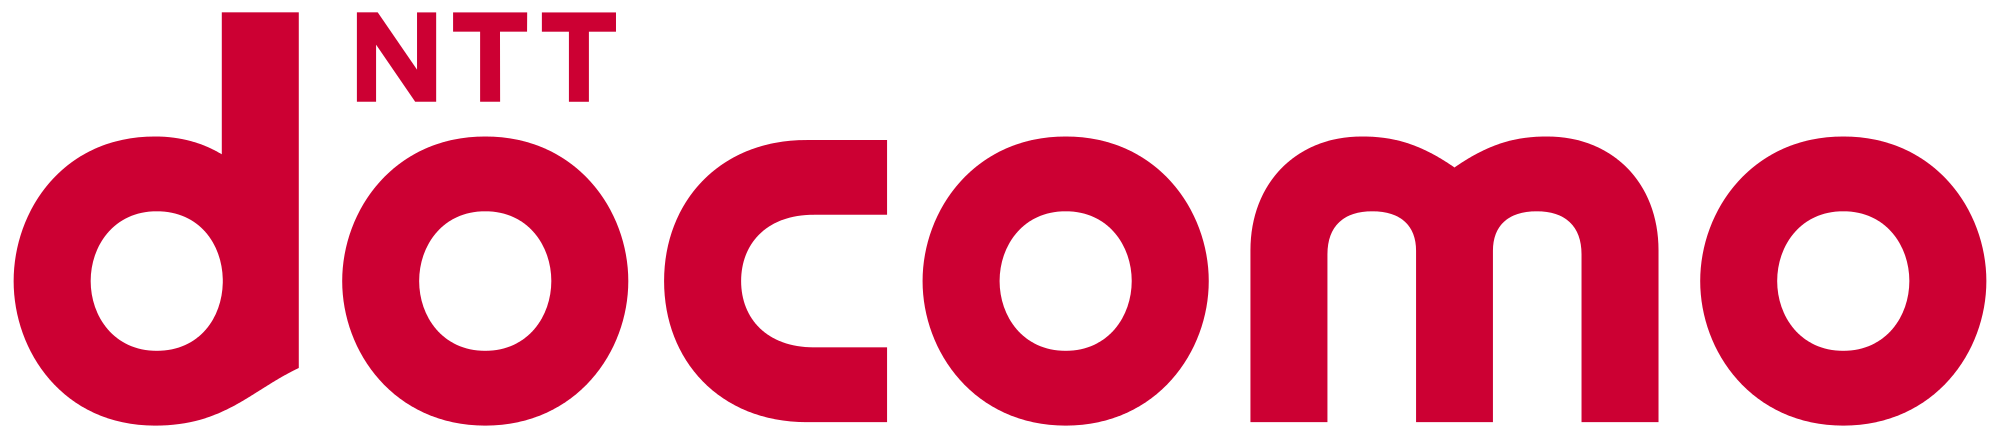 NTT Docomo Brand Logo